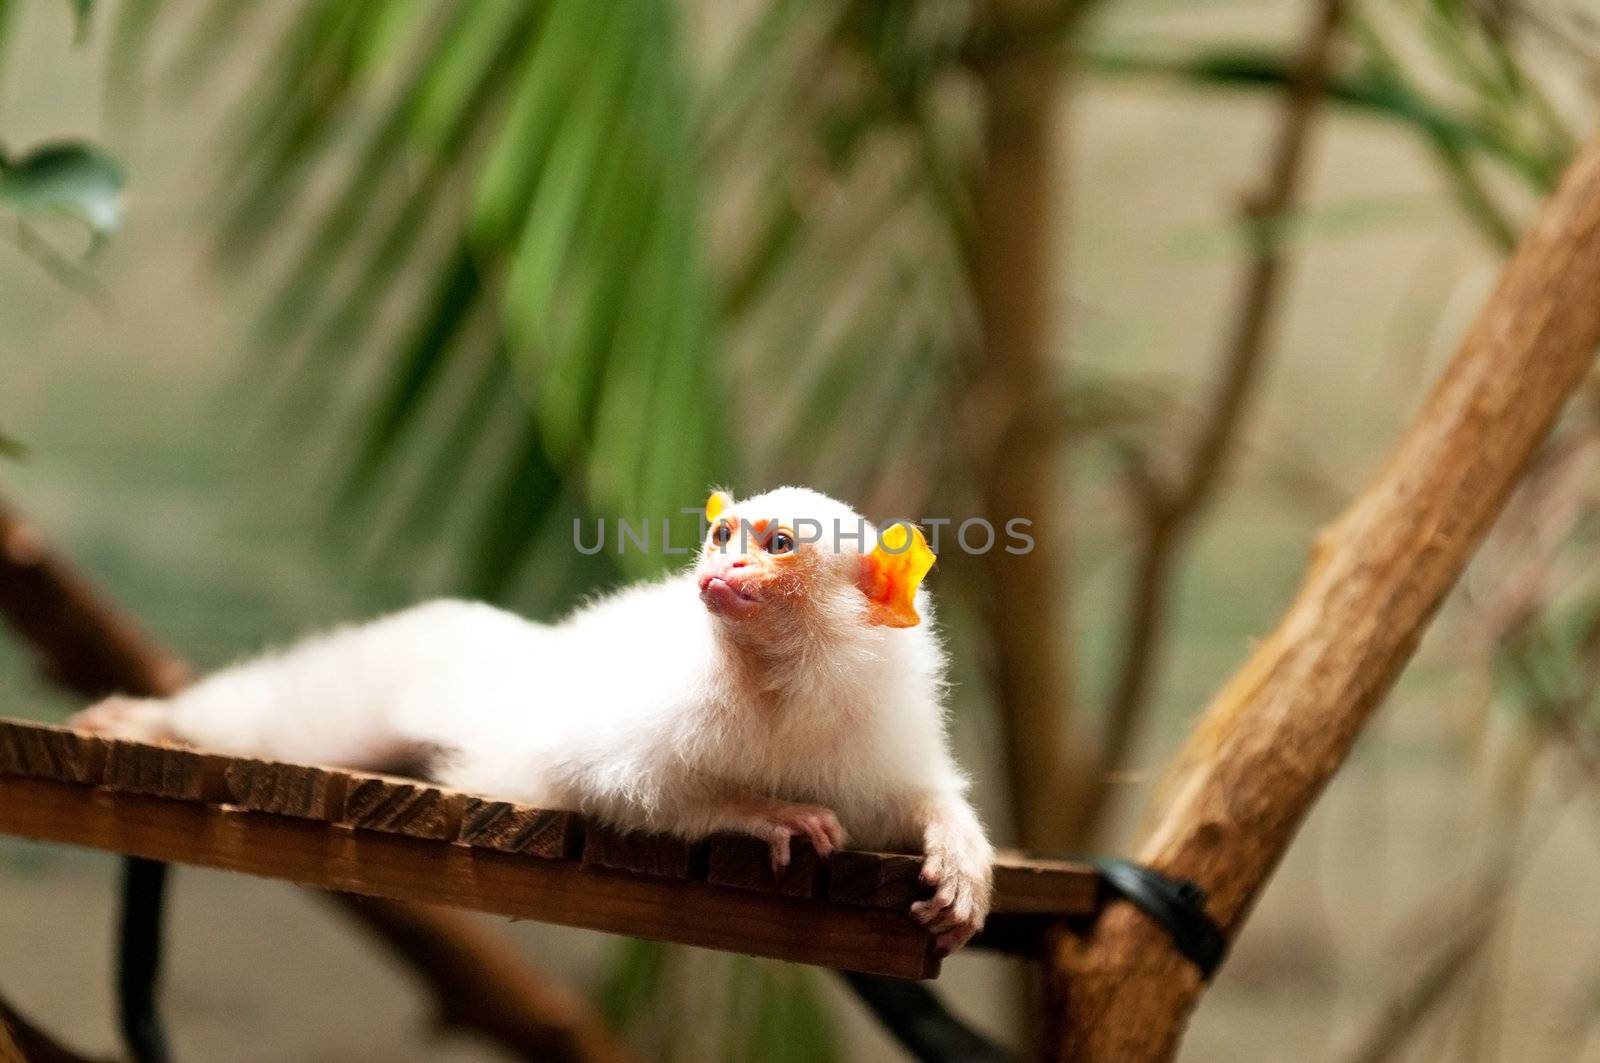 Monkey sitting on the branch